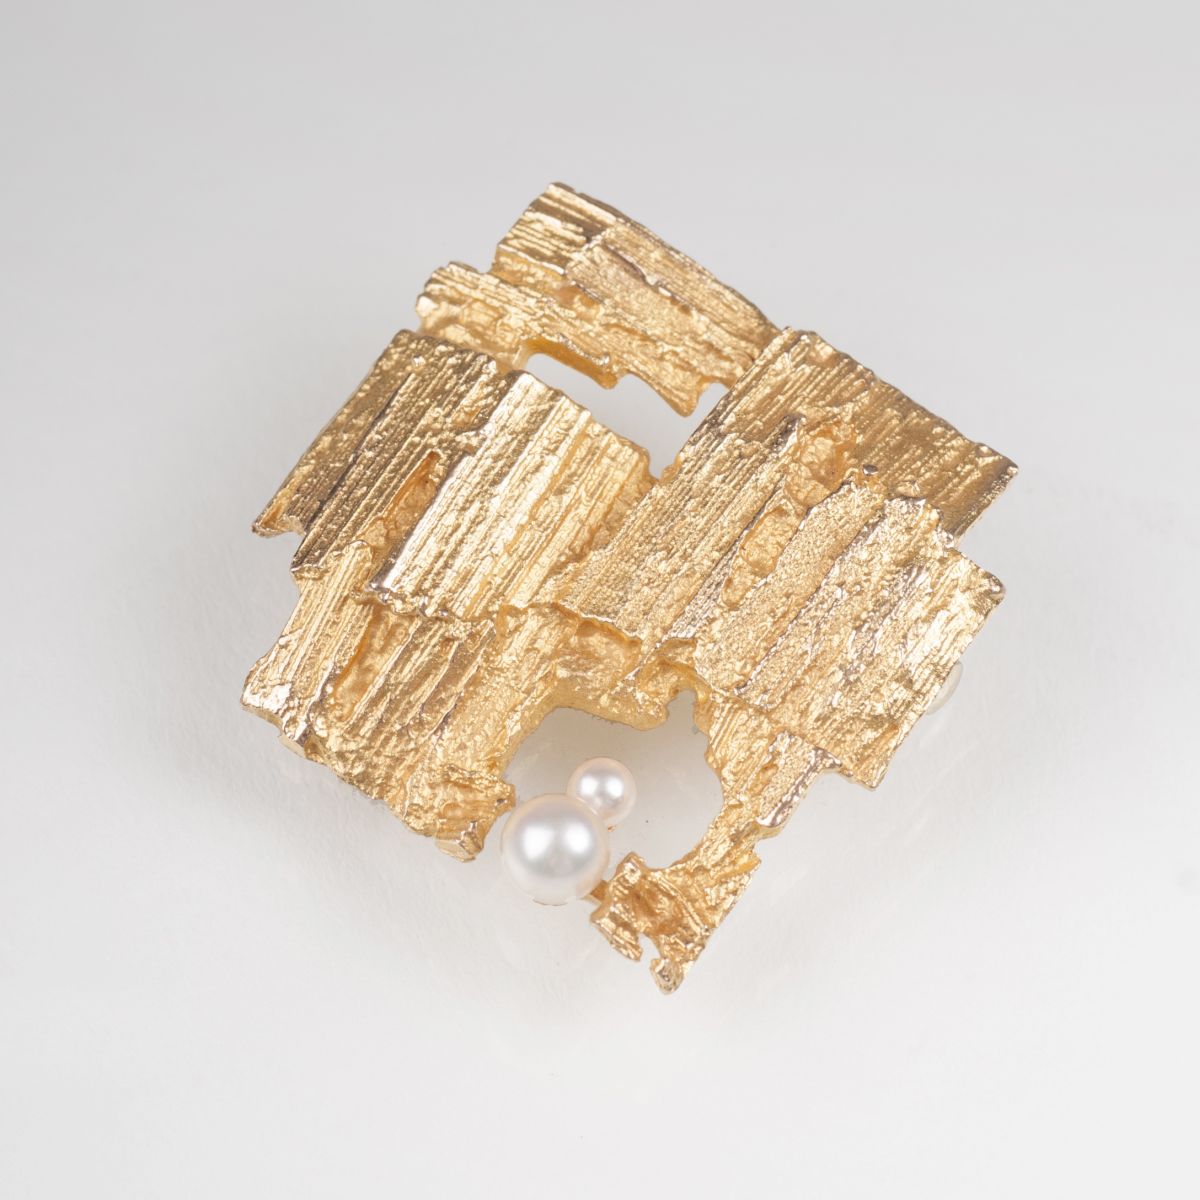 A modern gold brooch with small pearls by Björn Weckström